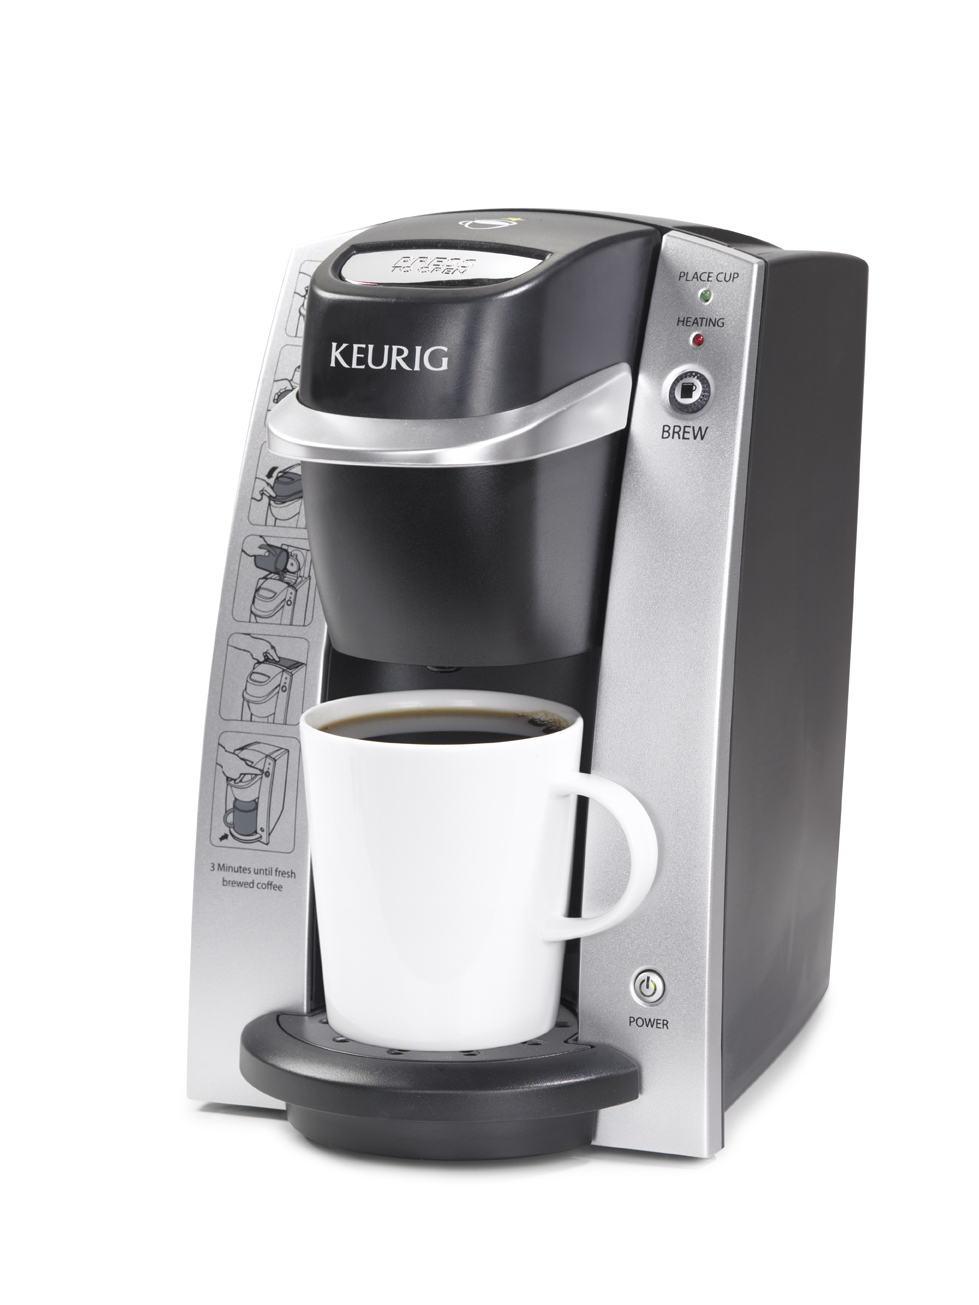 https://www.drinkmorewater.com/wp-content/uploads/2013/05/Keurig-B130-One-Cup-Coffee-Maker.jpg